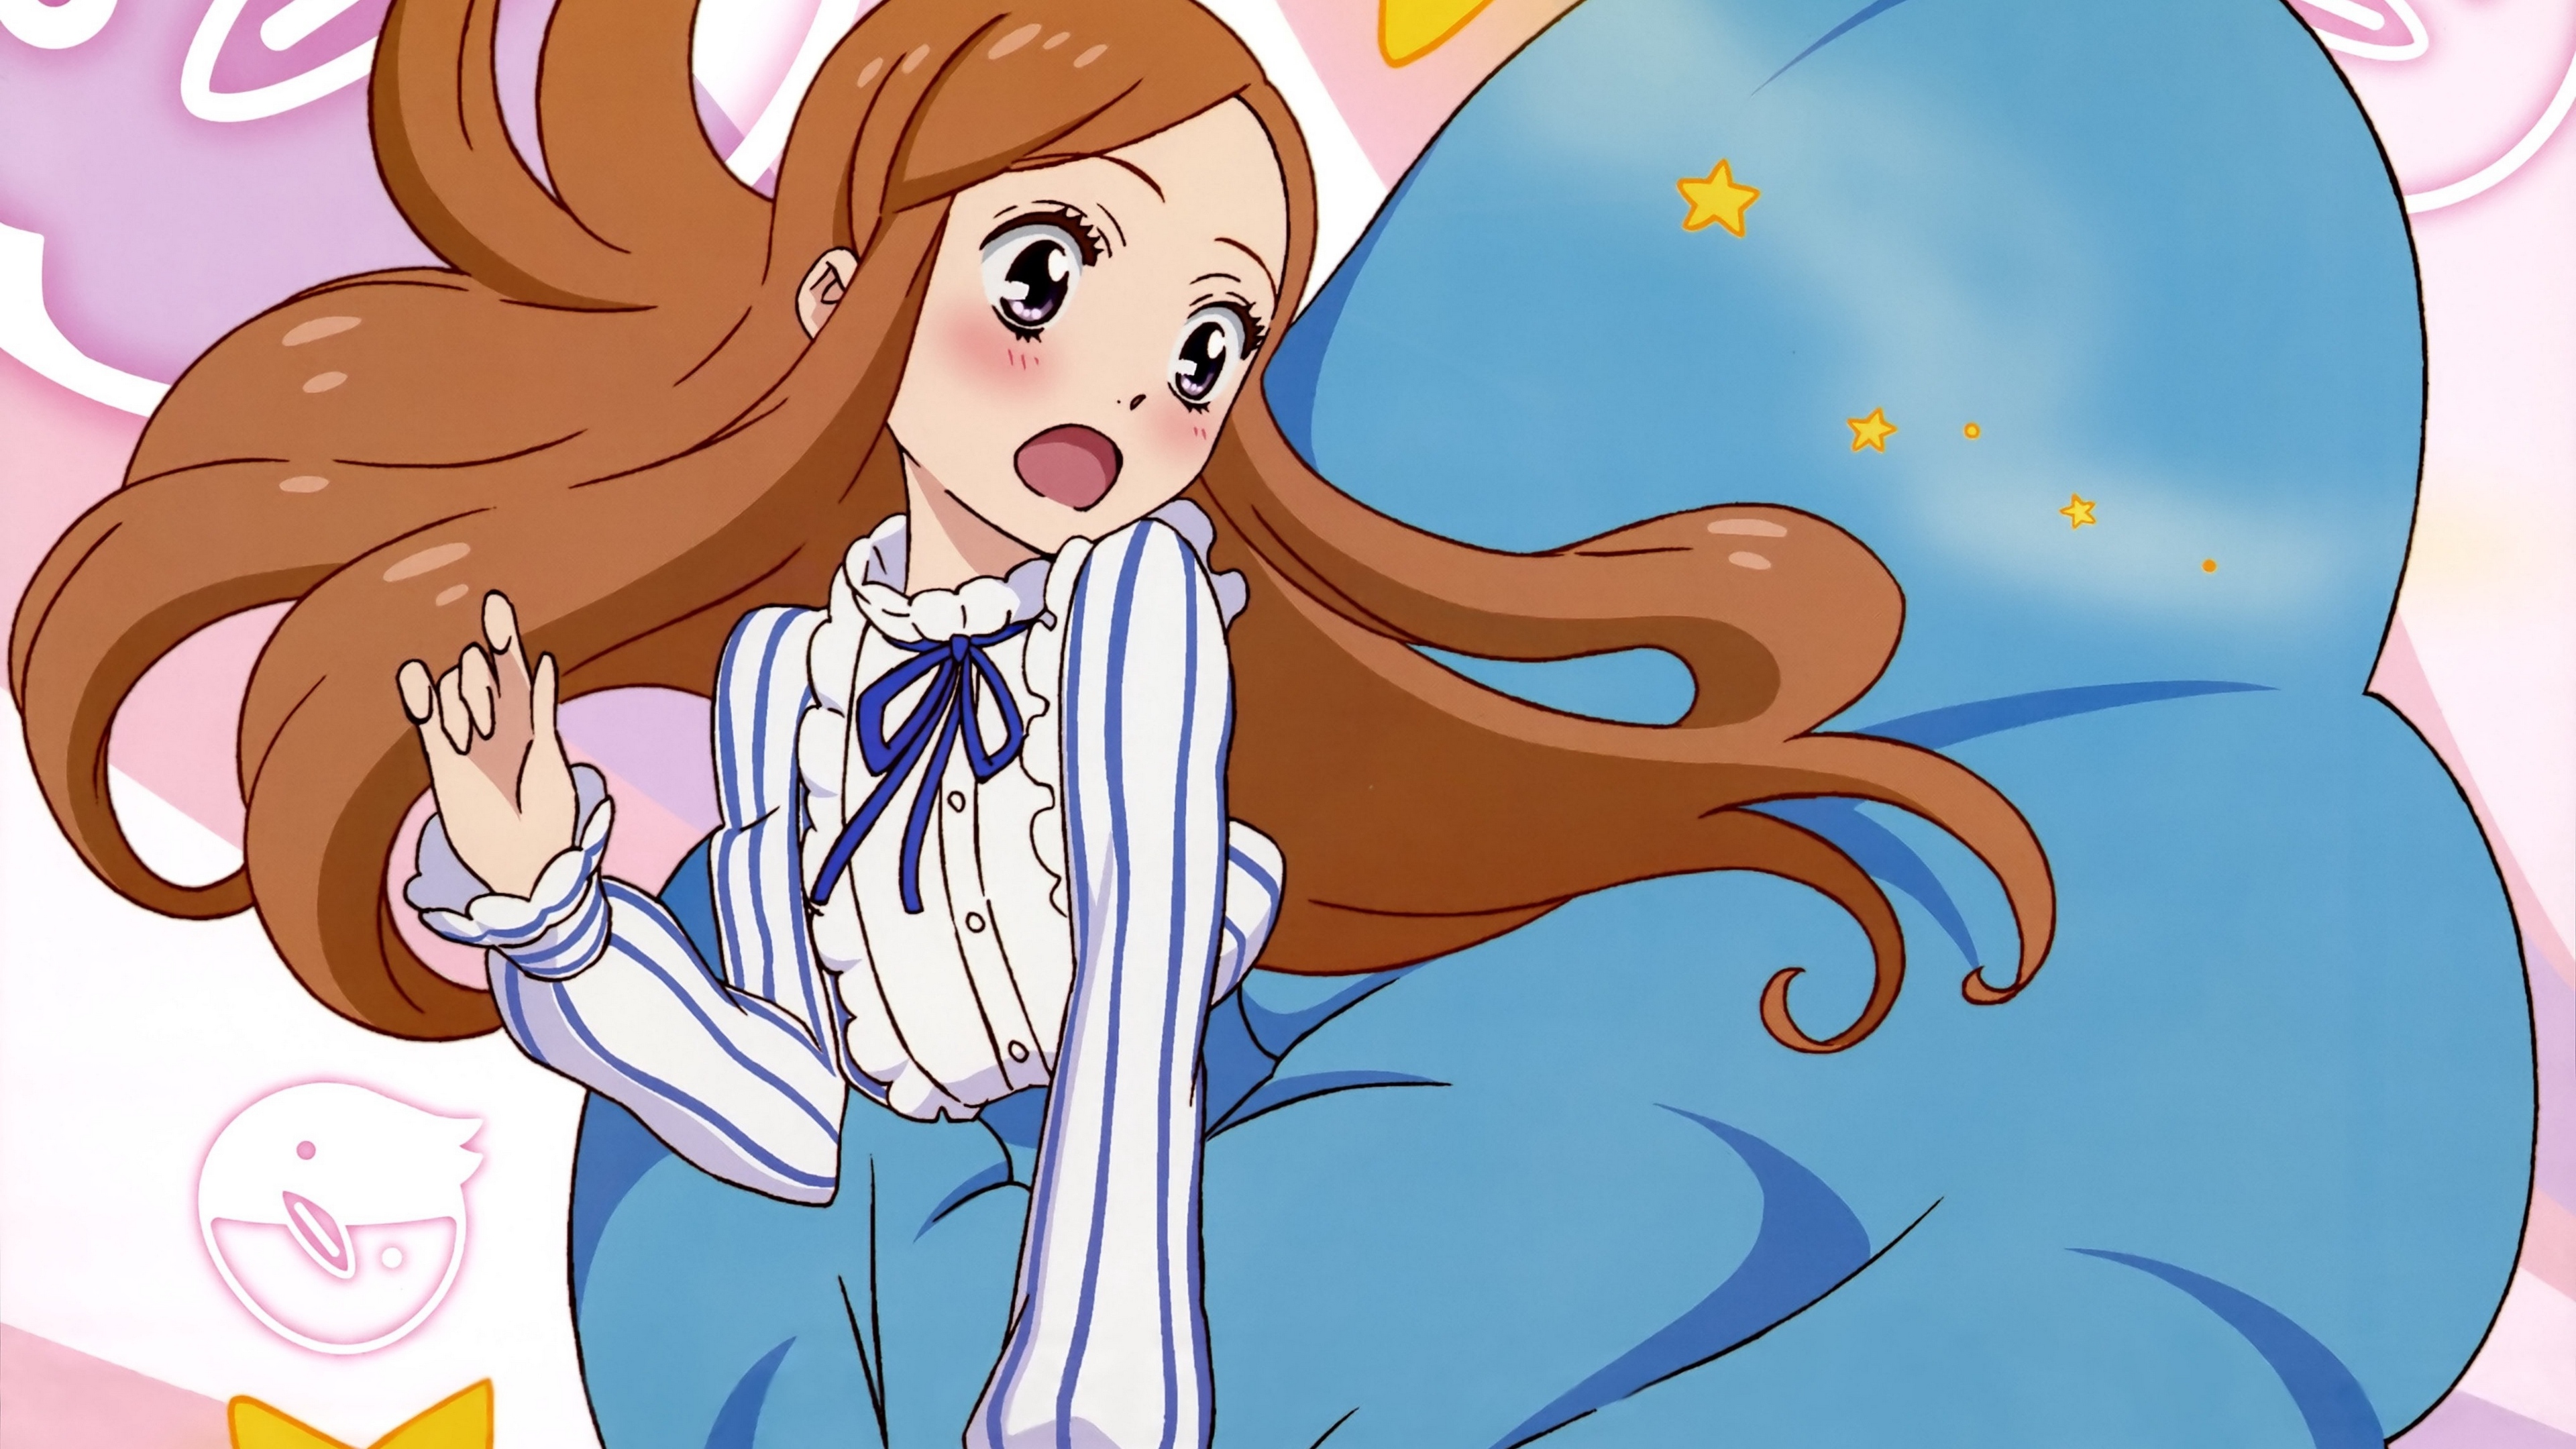 Summer Wind Anime-Girl by Jimking on DeviantArt